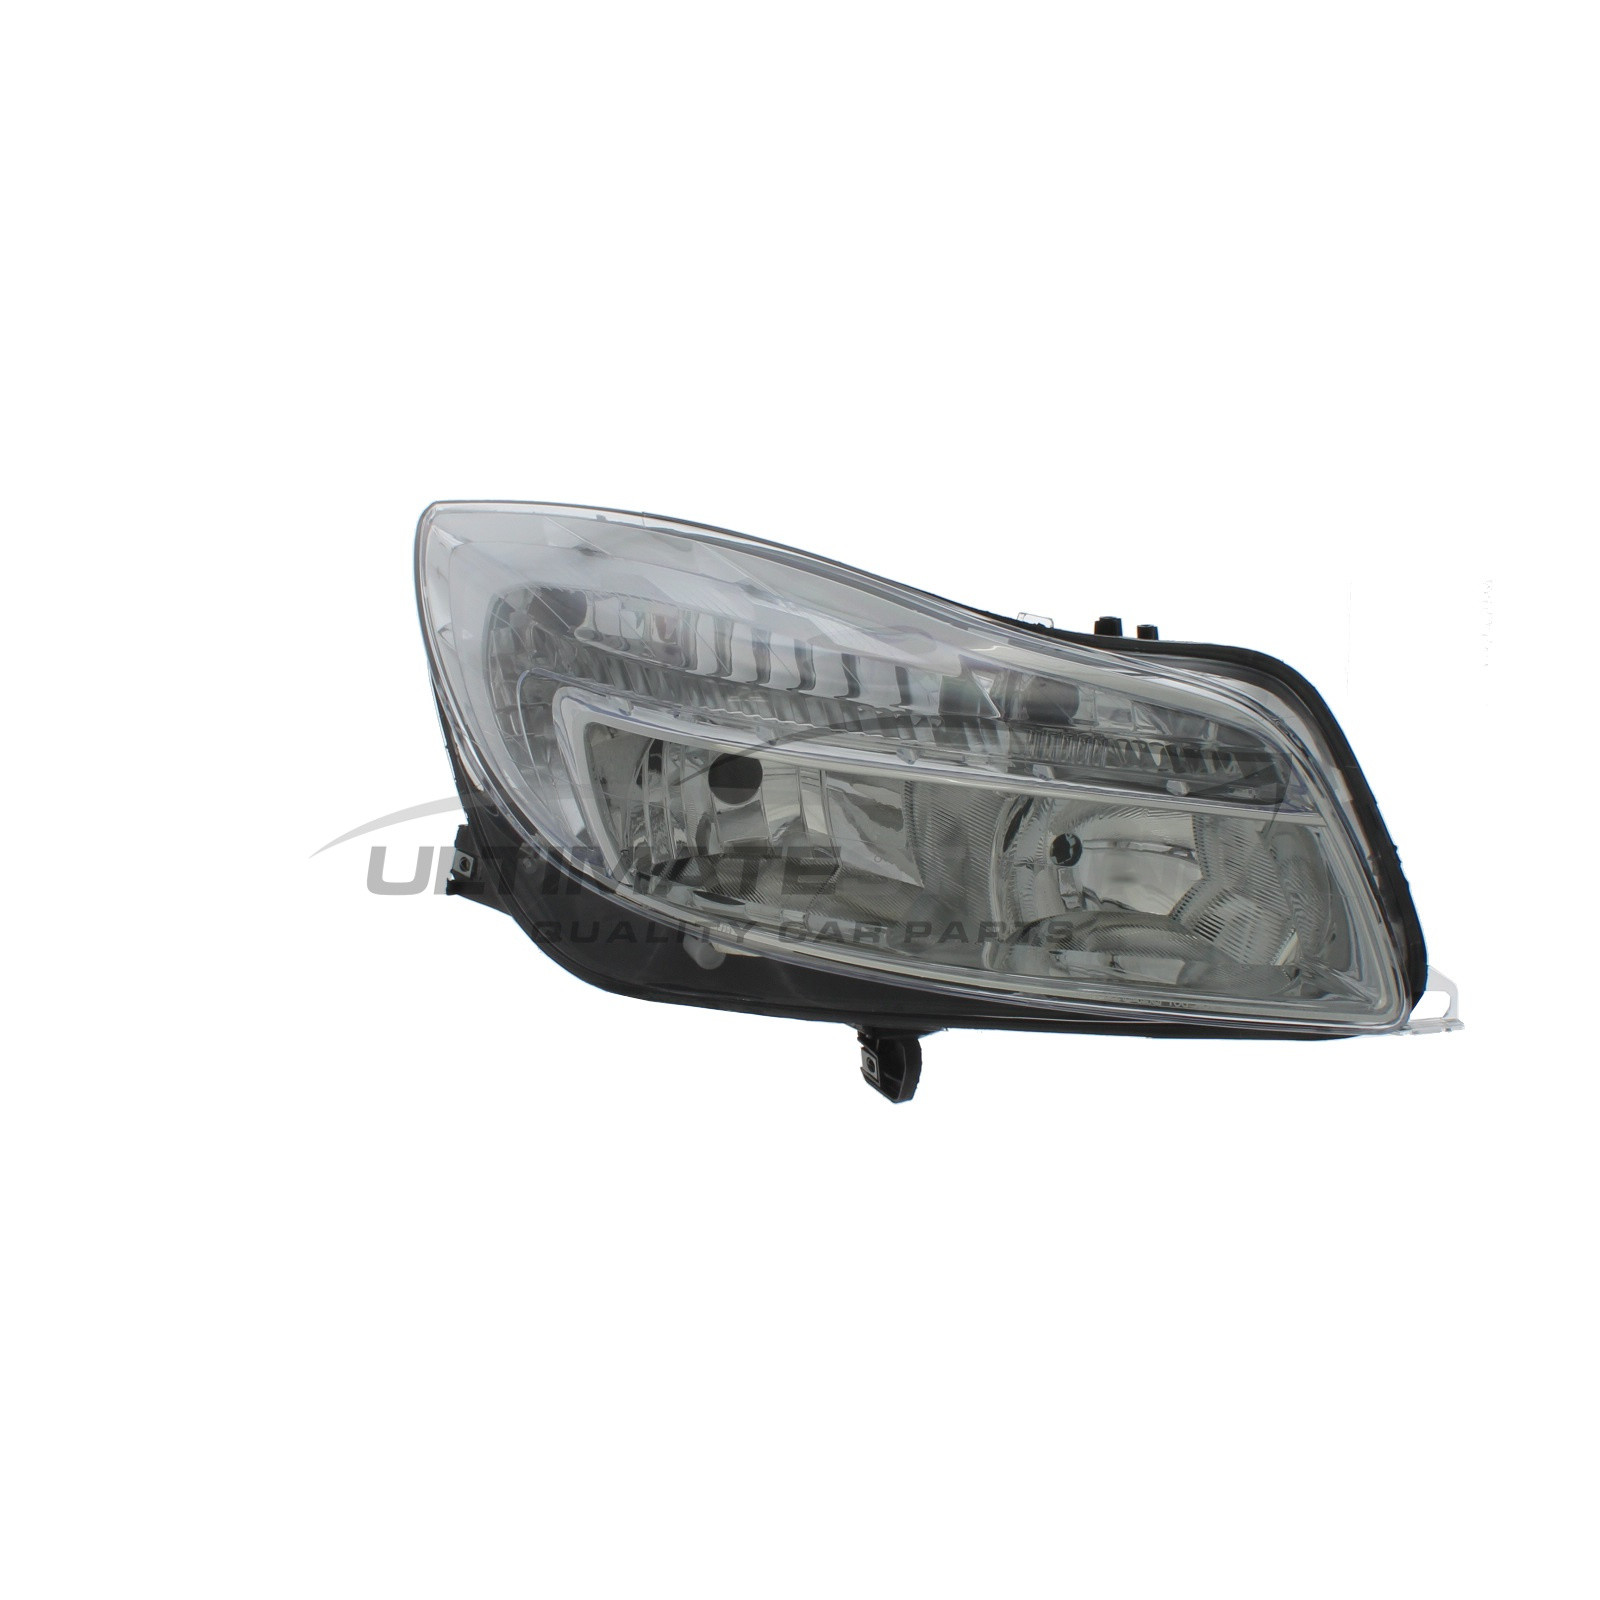 Headlight / Headlamp for Vauxhall Insignia